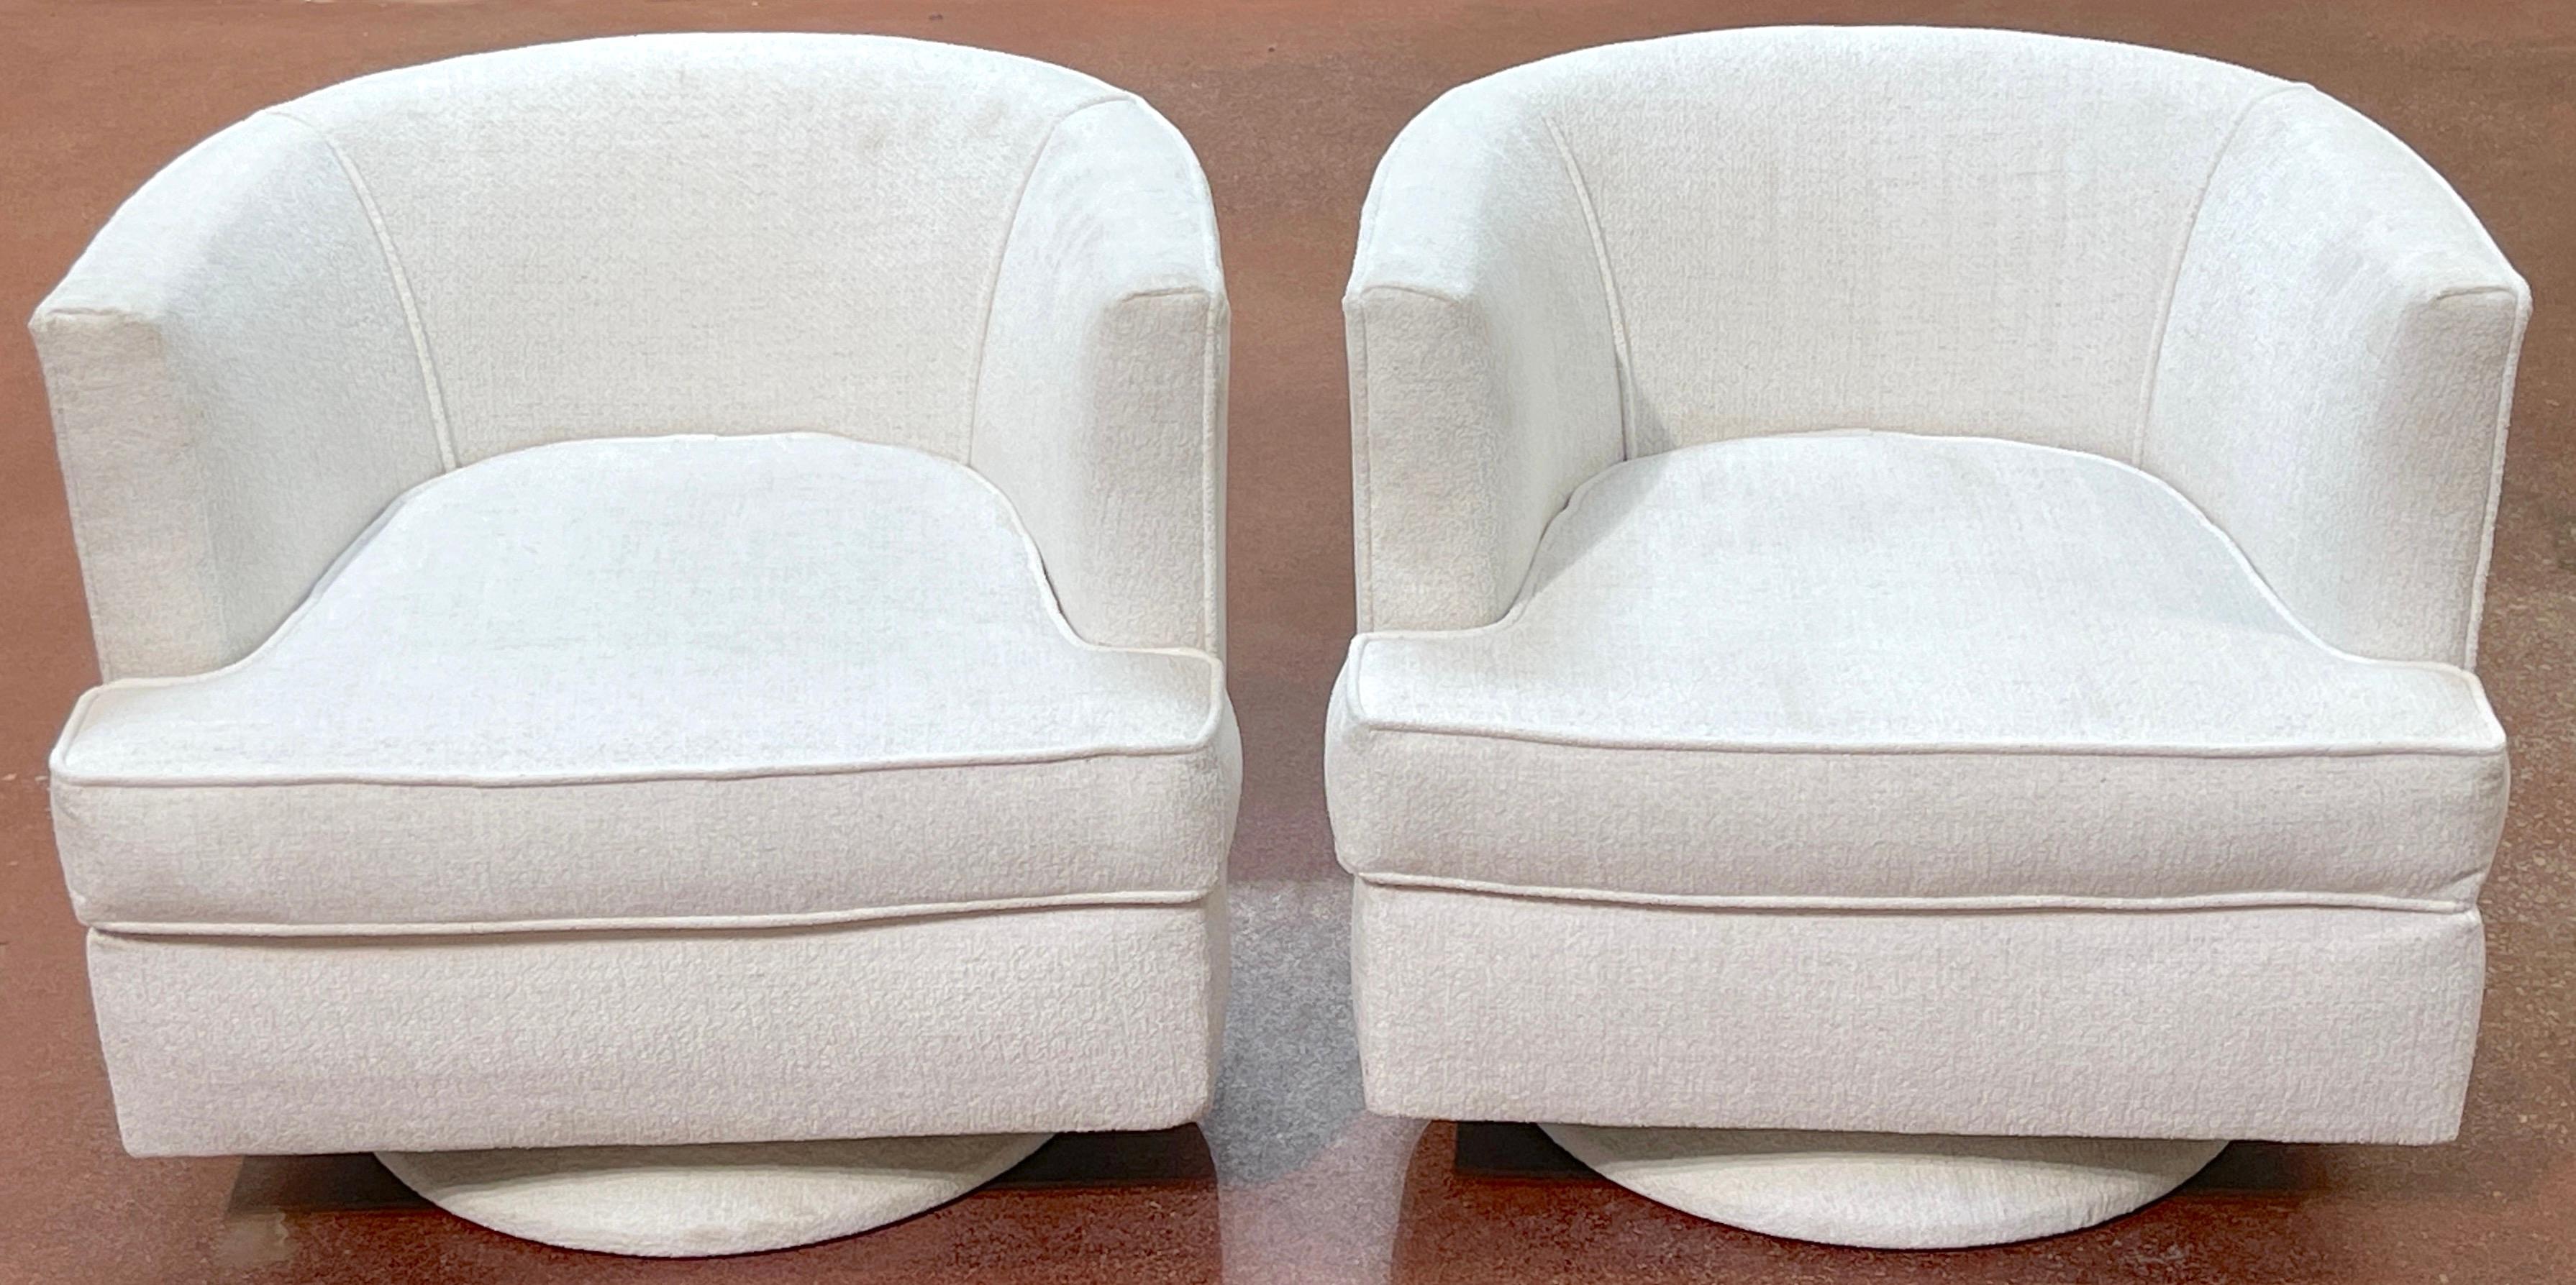 American Pair of Sleek Mid-Century Modern Swivel Chairs Kravet Boucle Fabric, C. 1970s For Sale